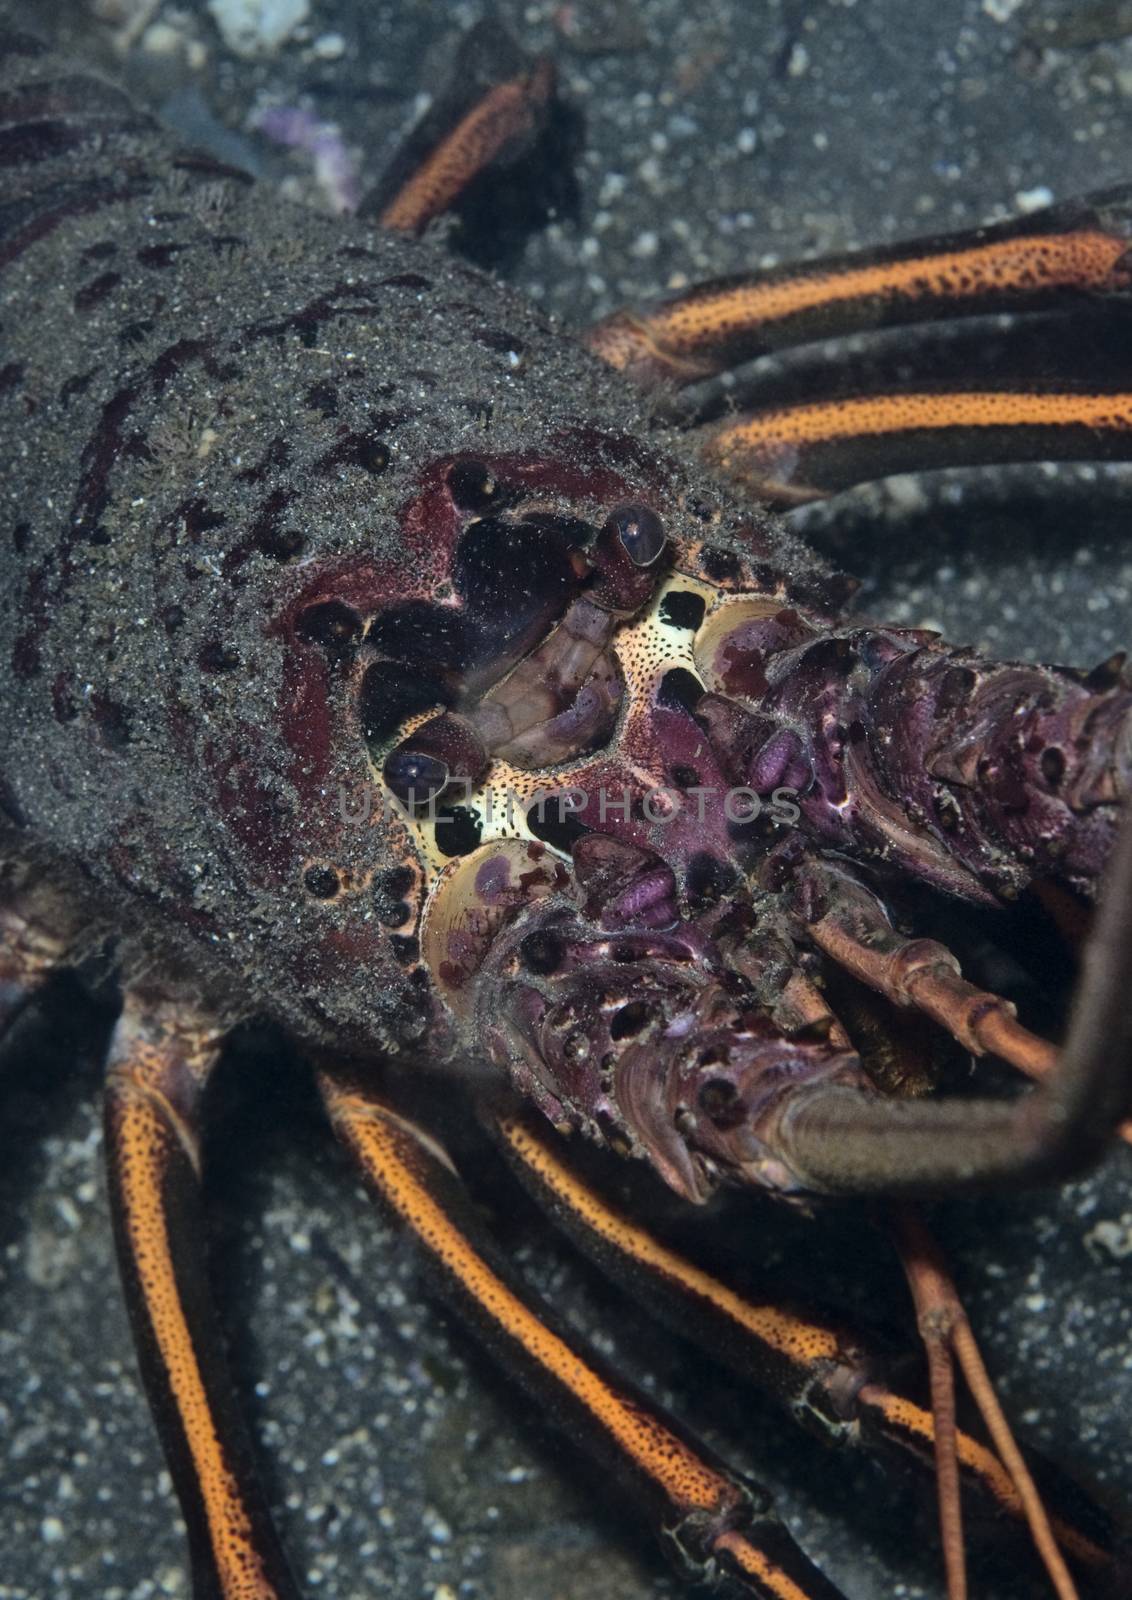 Spiny Lobster (Panulirus interruptus) by Njean